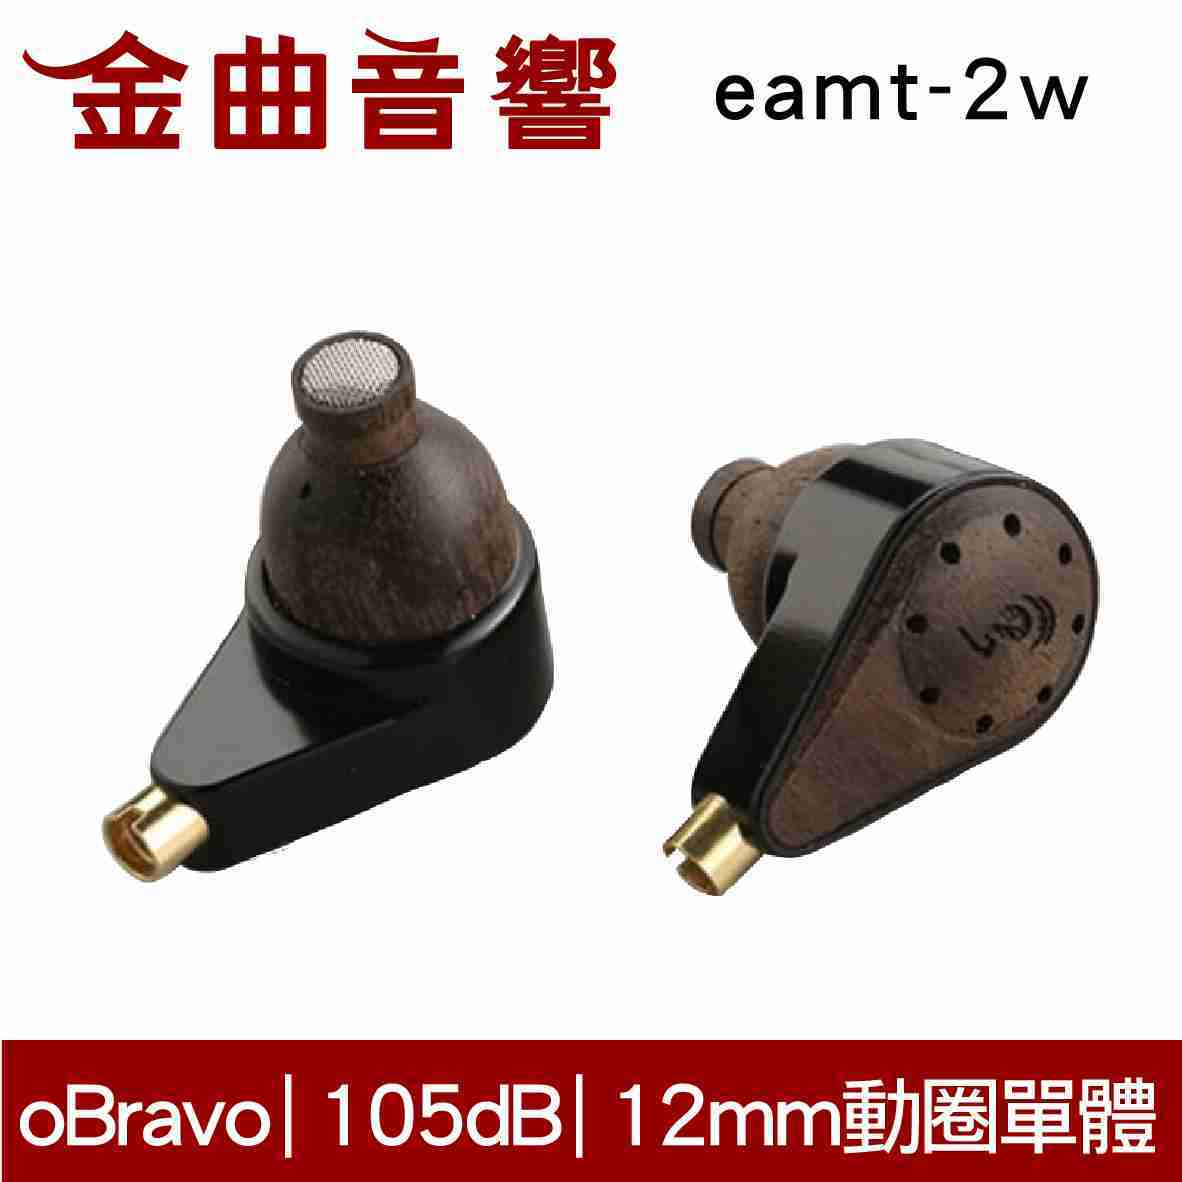 oBravo eamt-2w 氣動式 高音 耳道式耳機 | 金曲音響